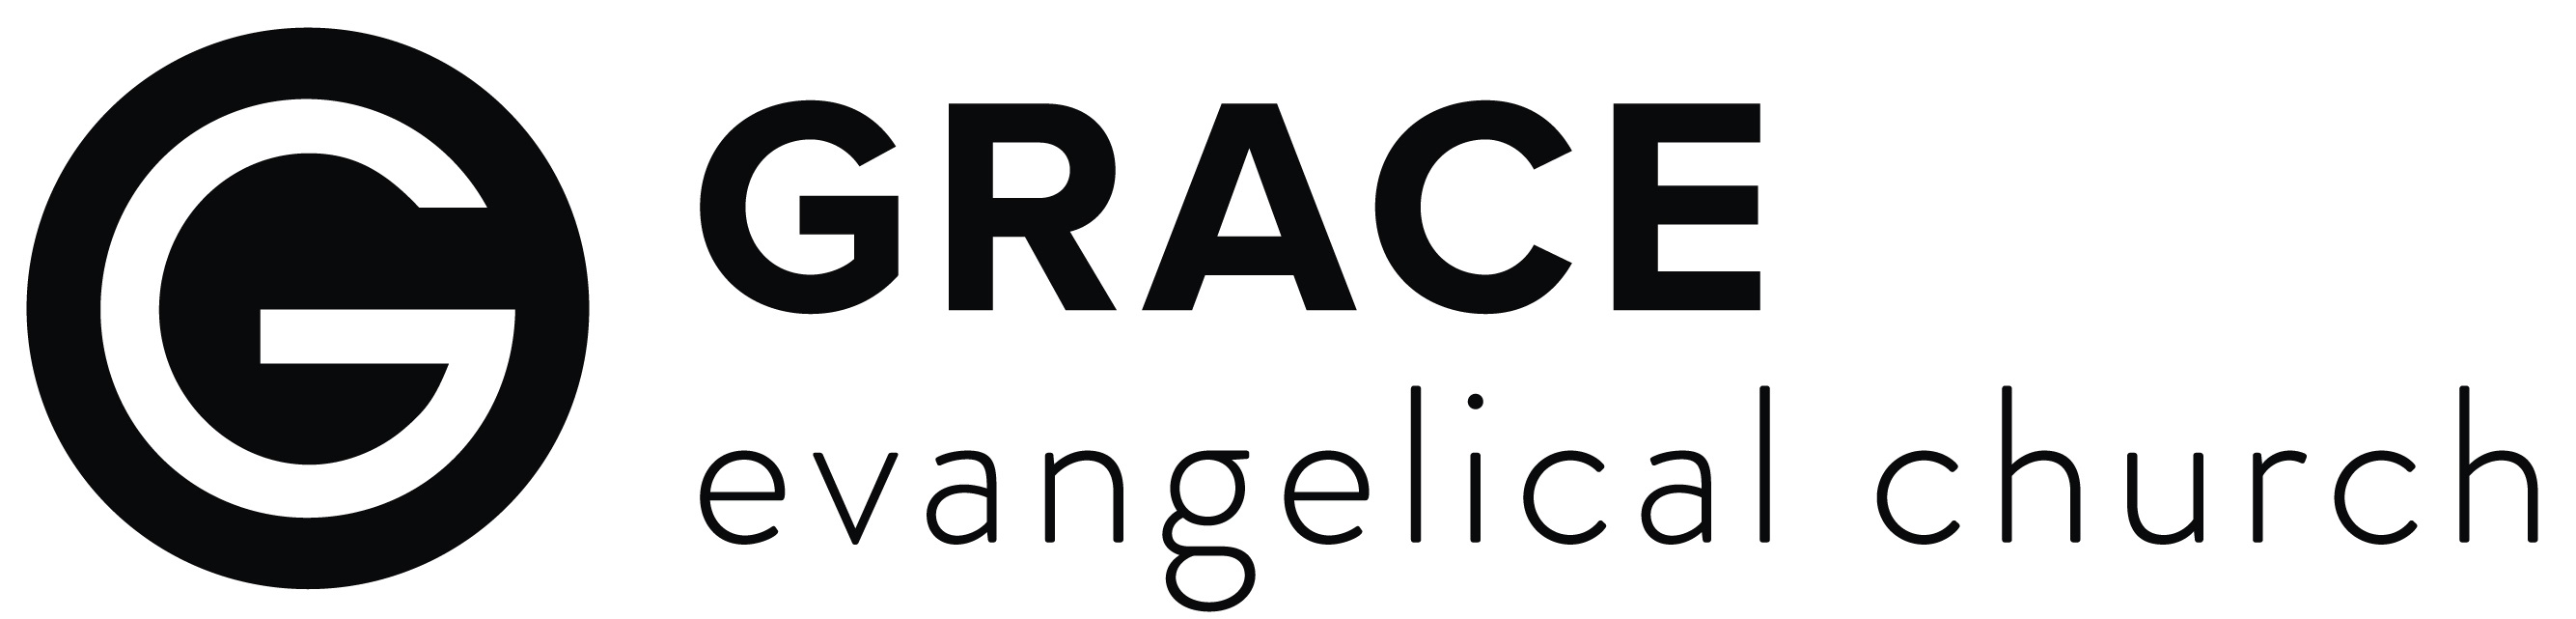 Grace Evangelical